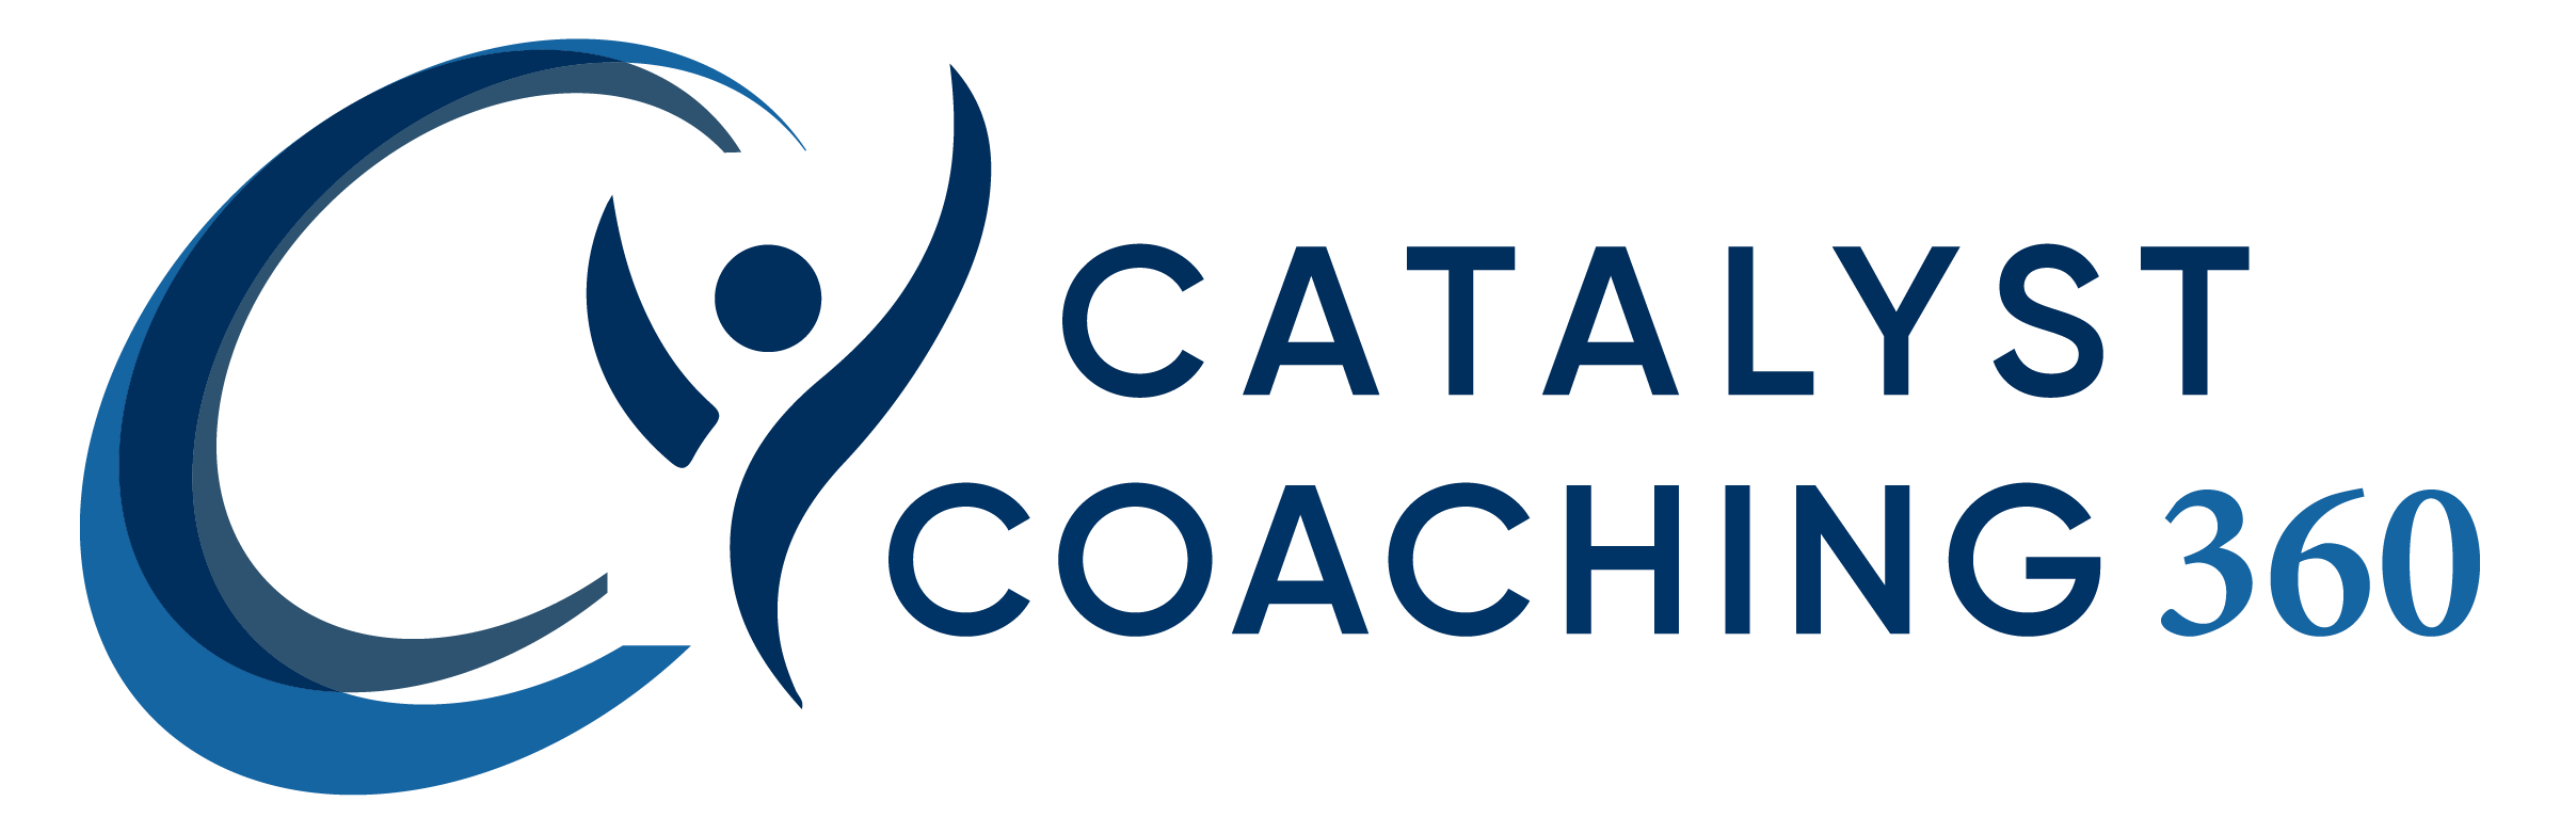 Catalyst Coaching 360 Logo